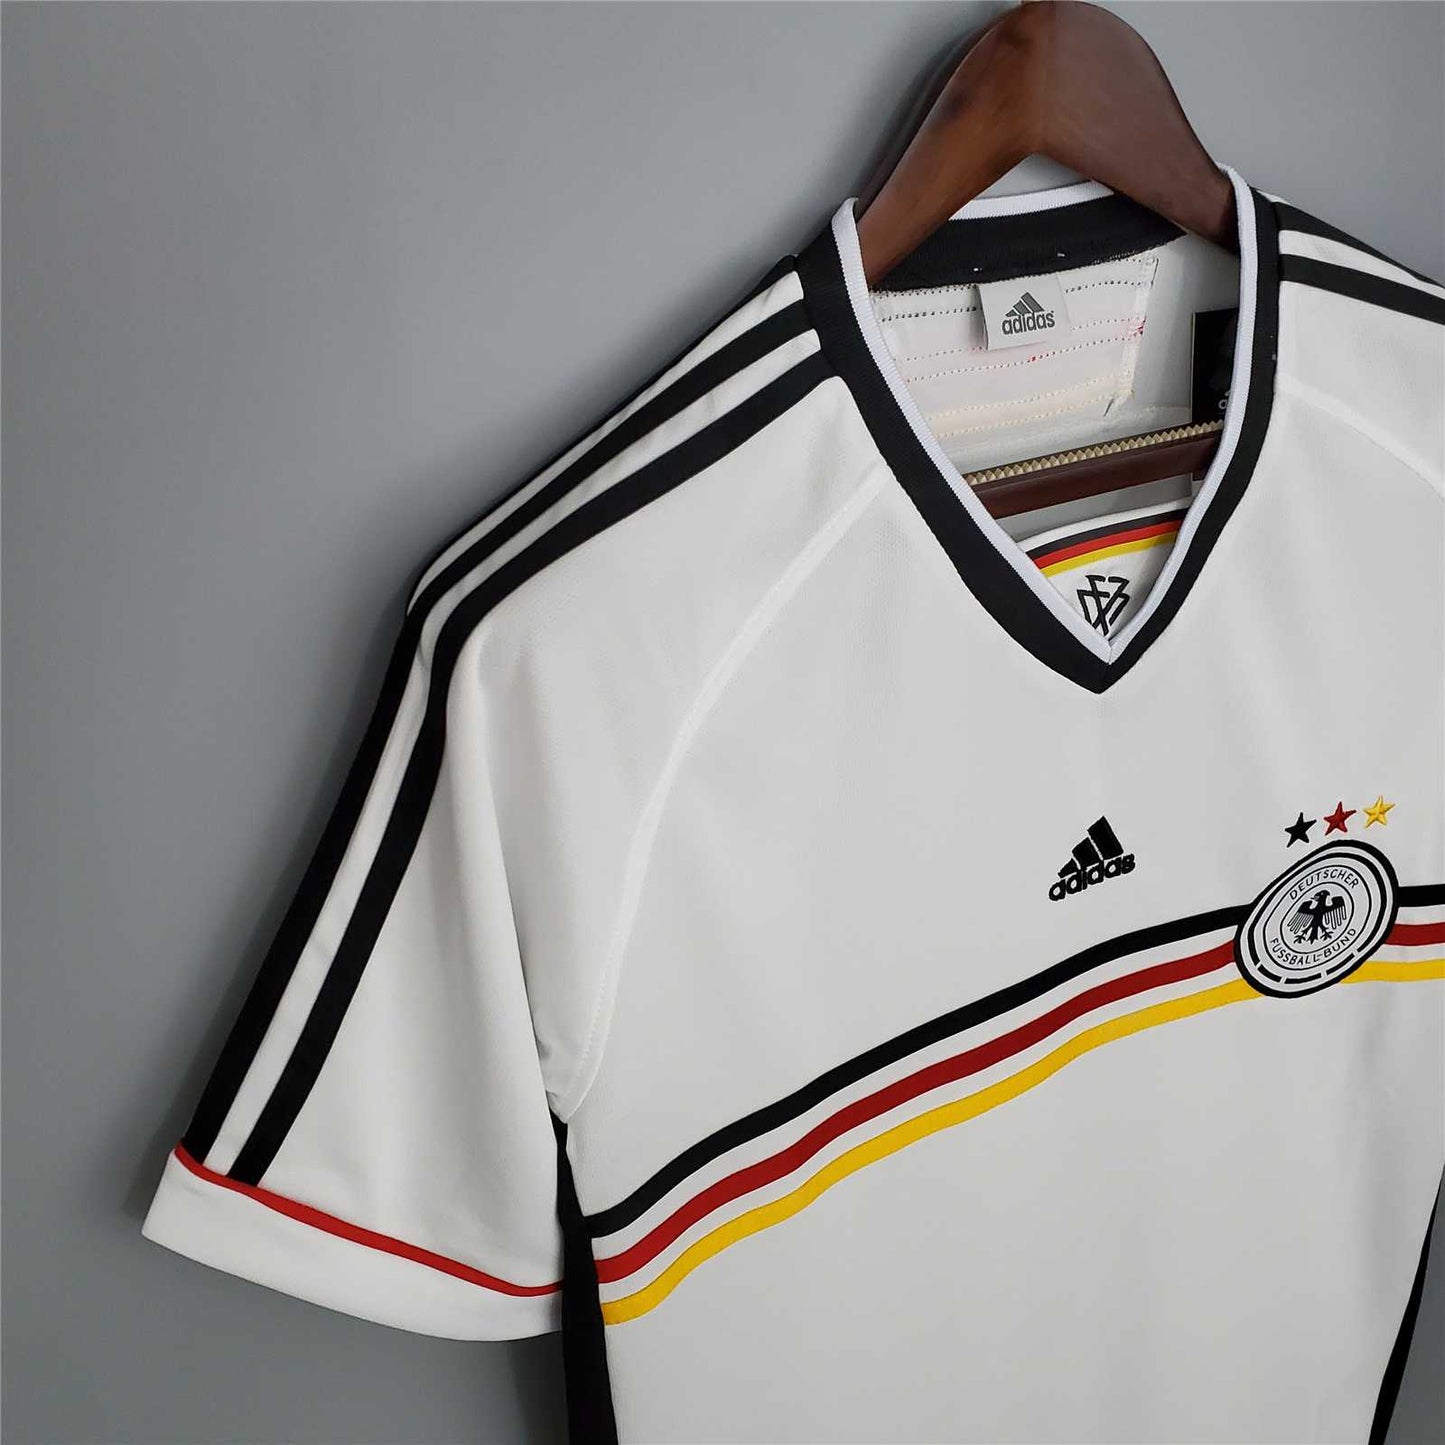 Germany 1998 Retro Vintage Home Jersey